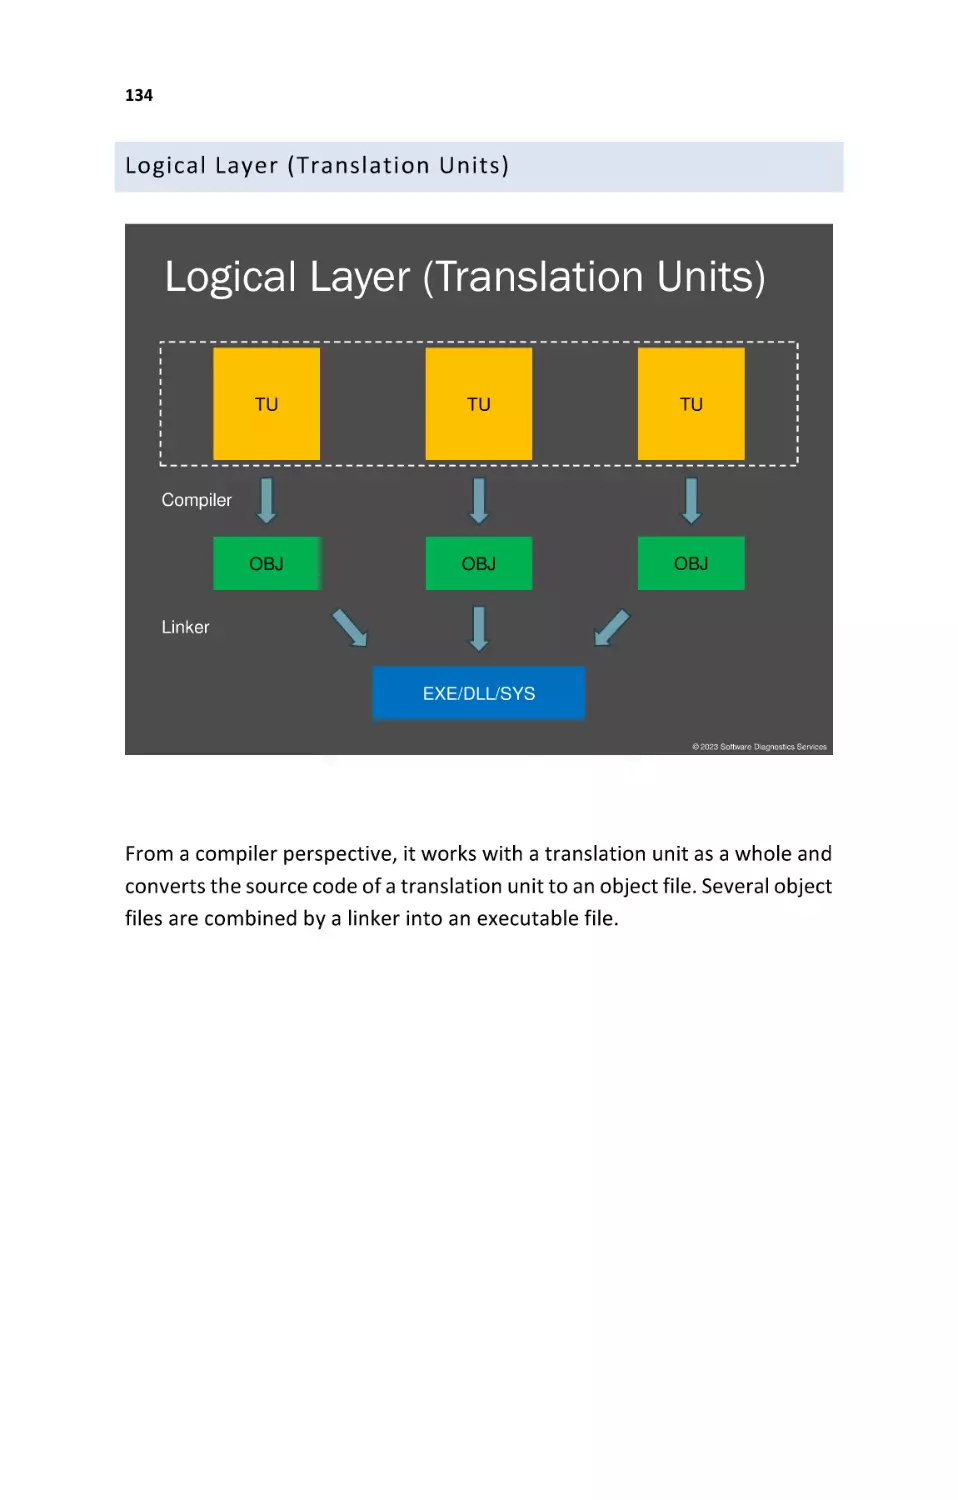 Logical Layer (Translation Units)